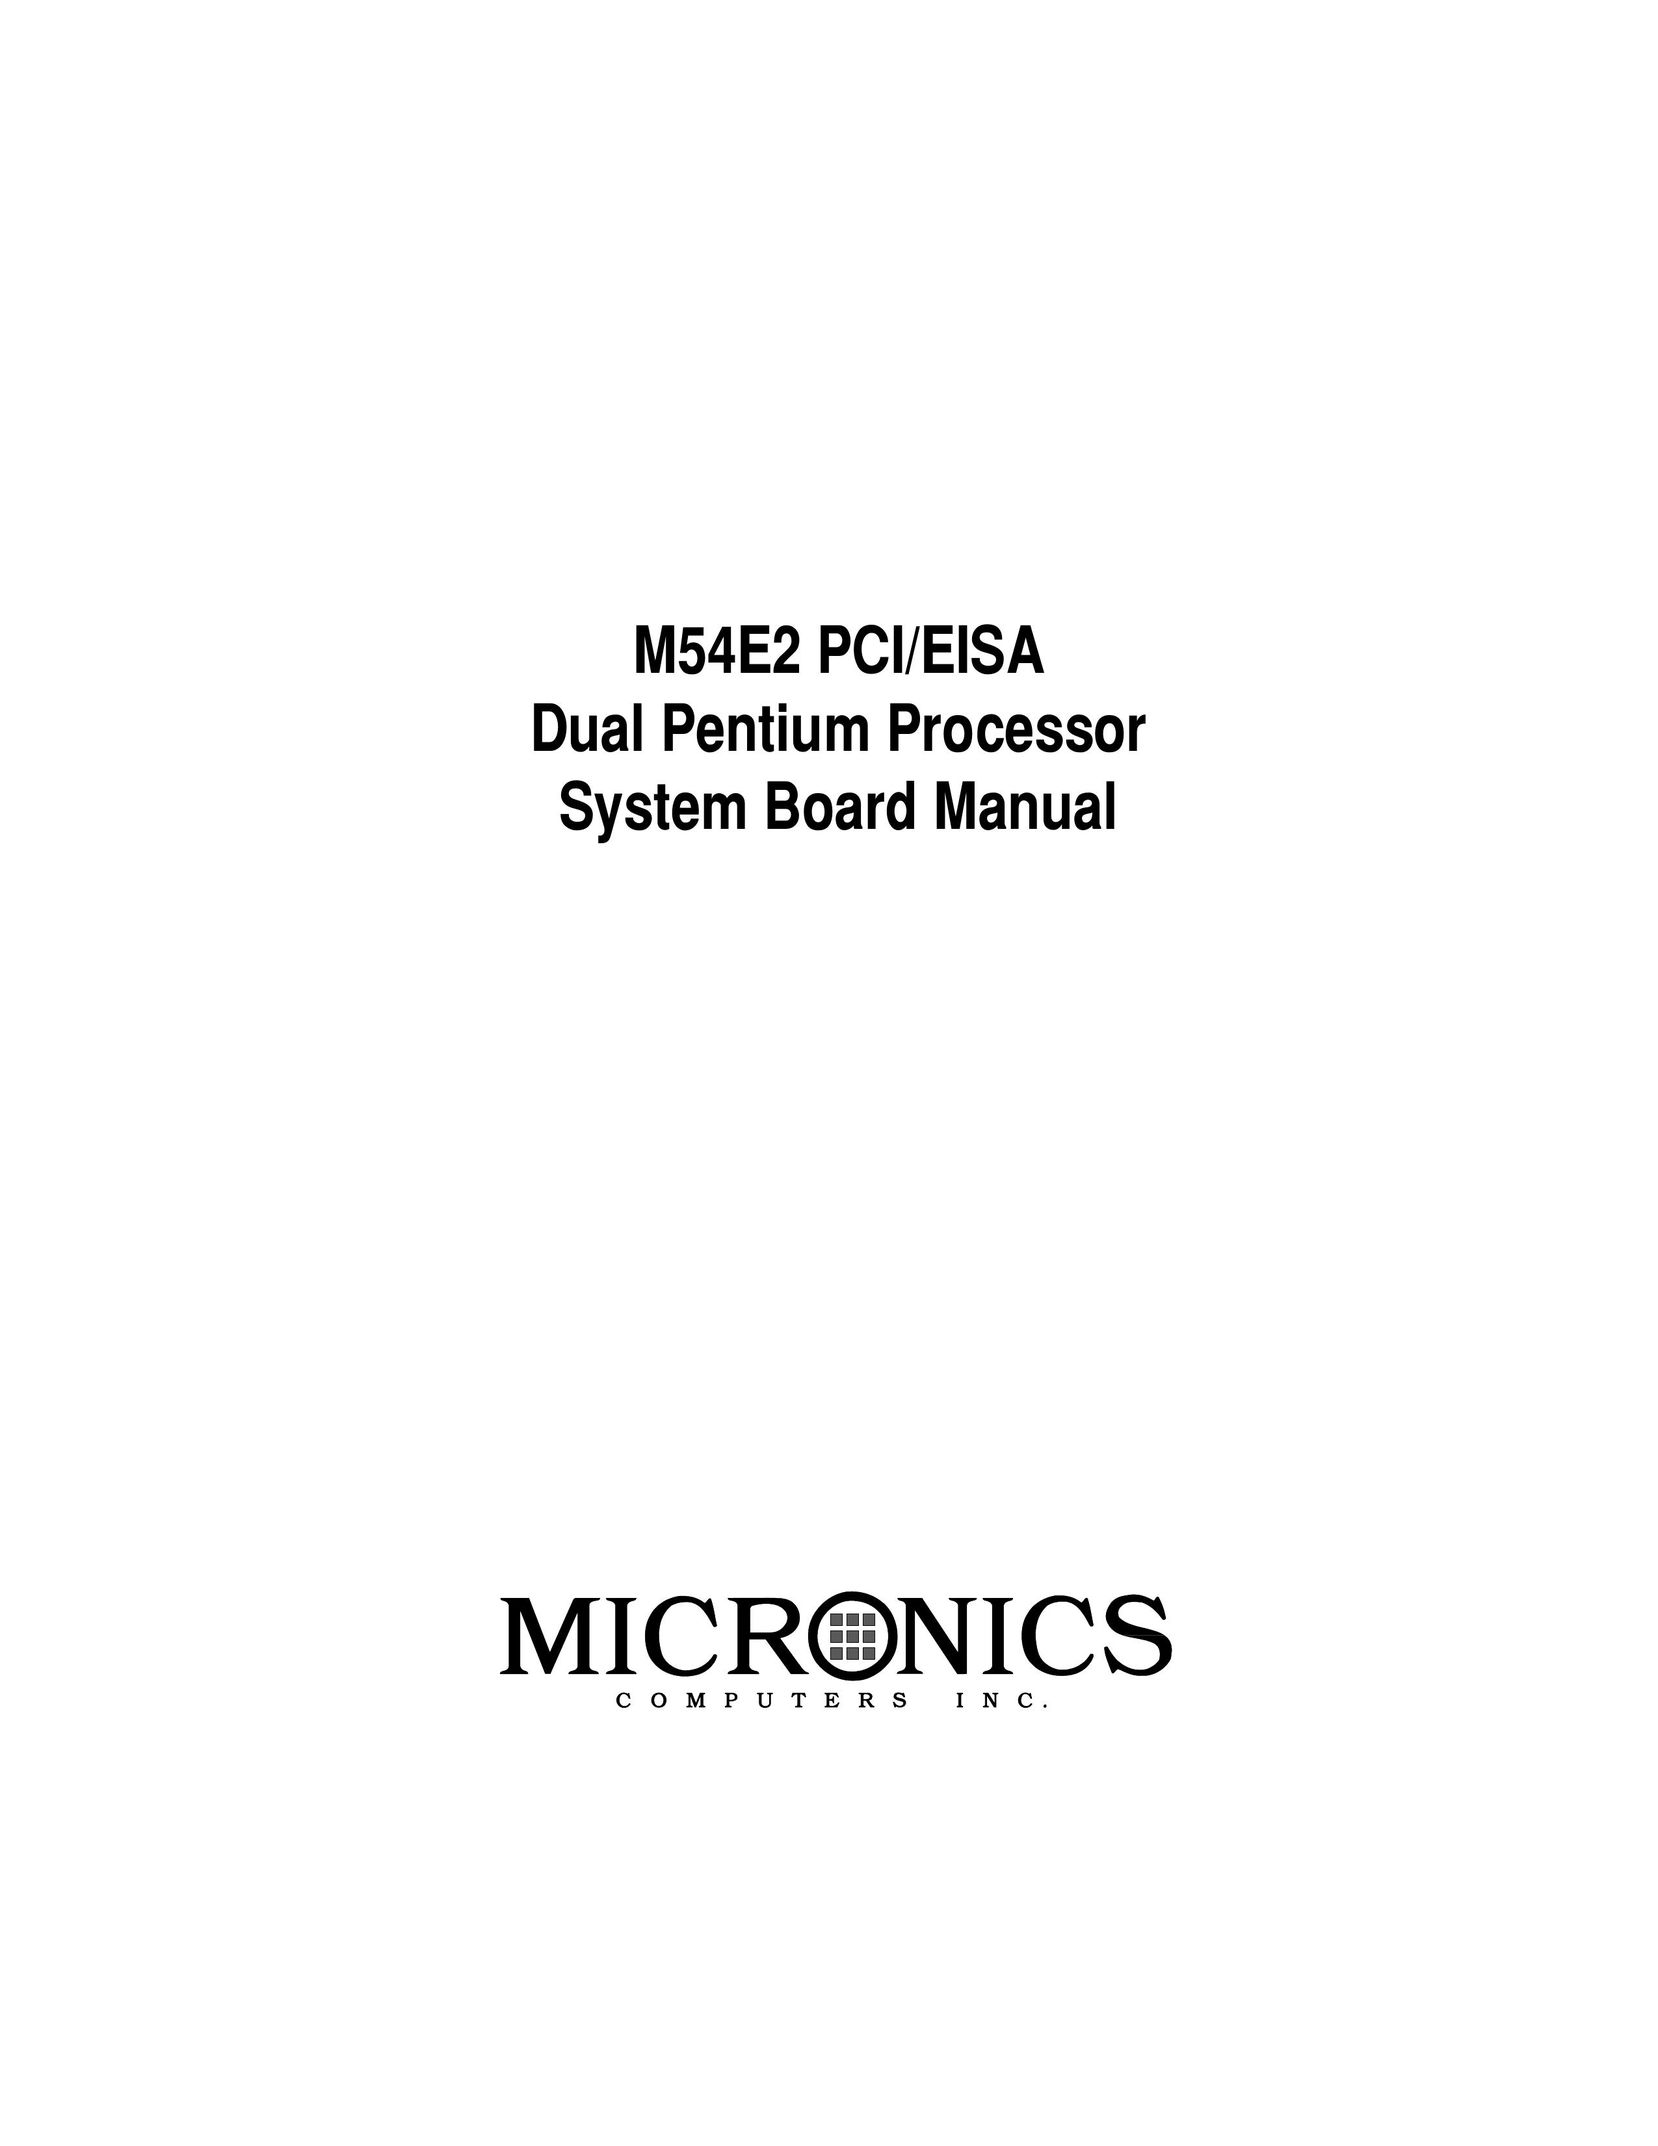 Micronics M54E2 PCI/EISA Computer Hardware User Manual